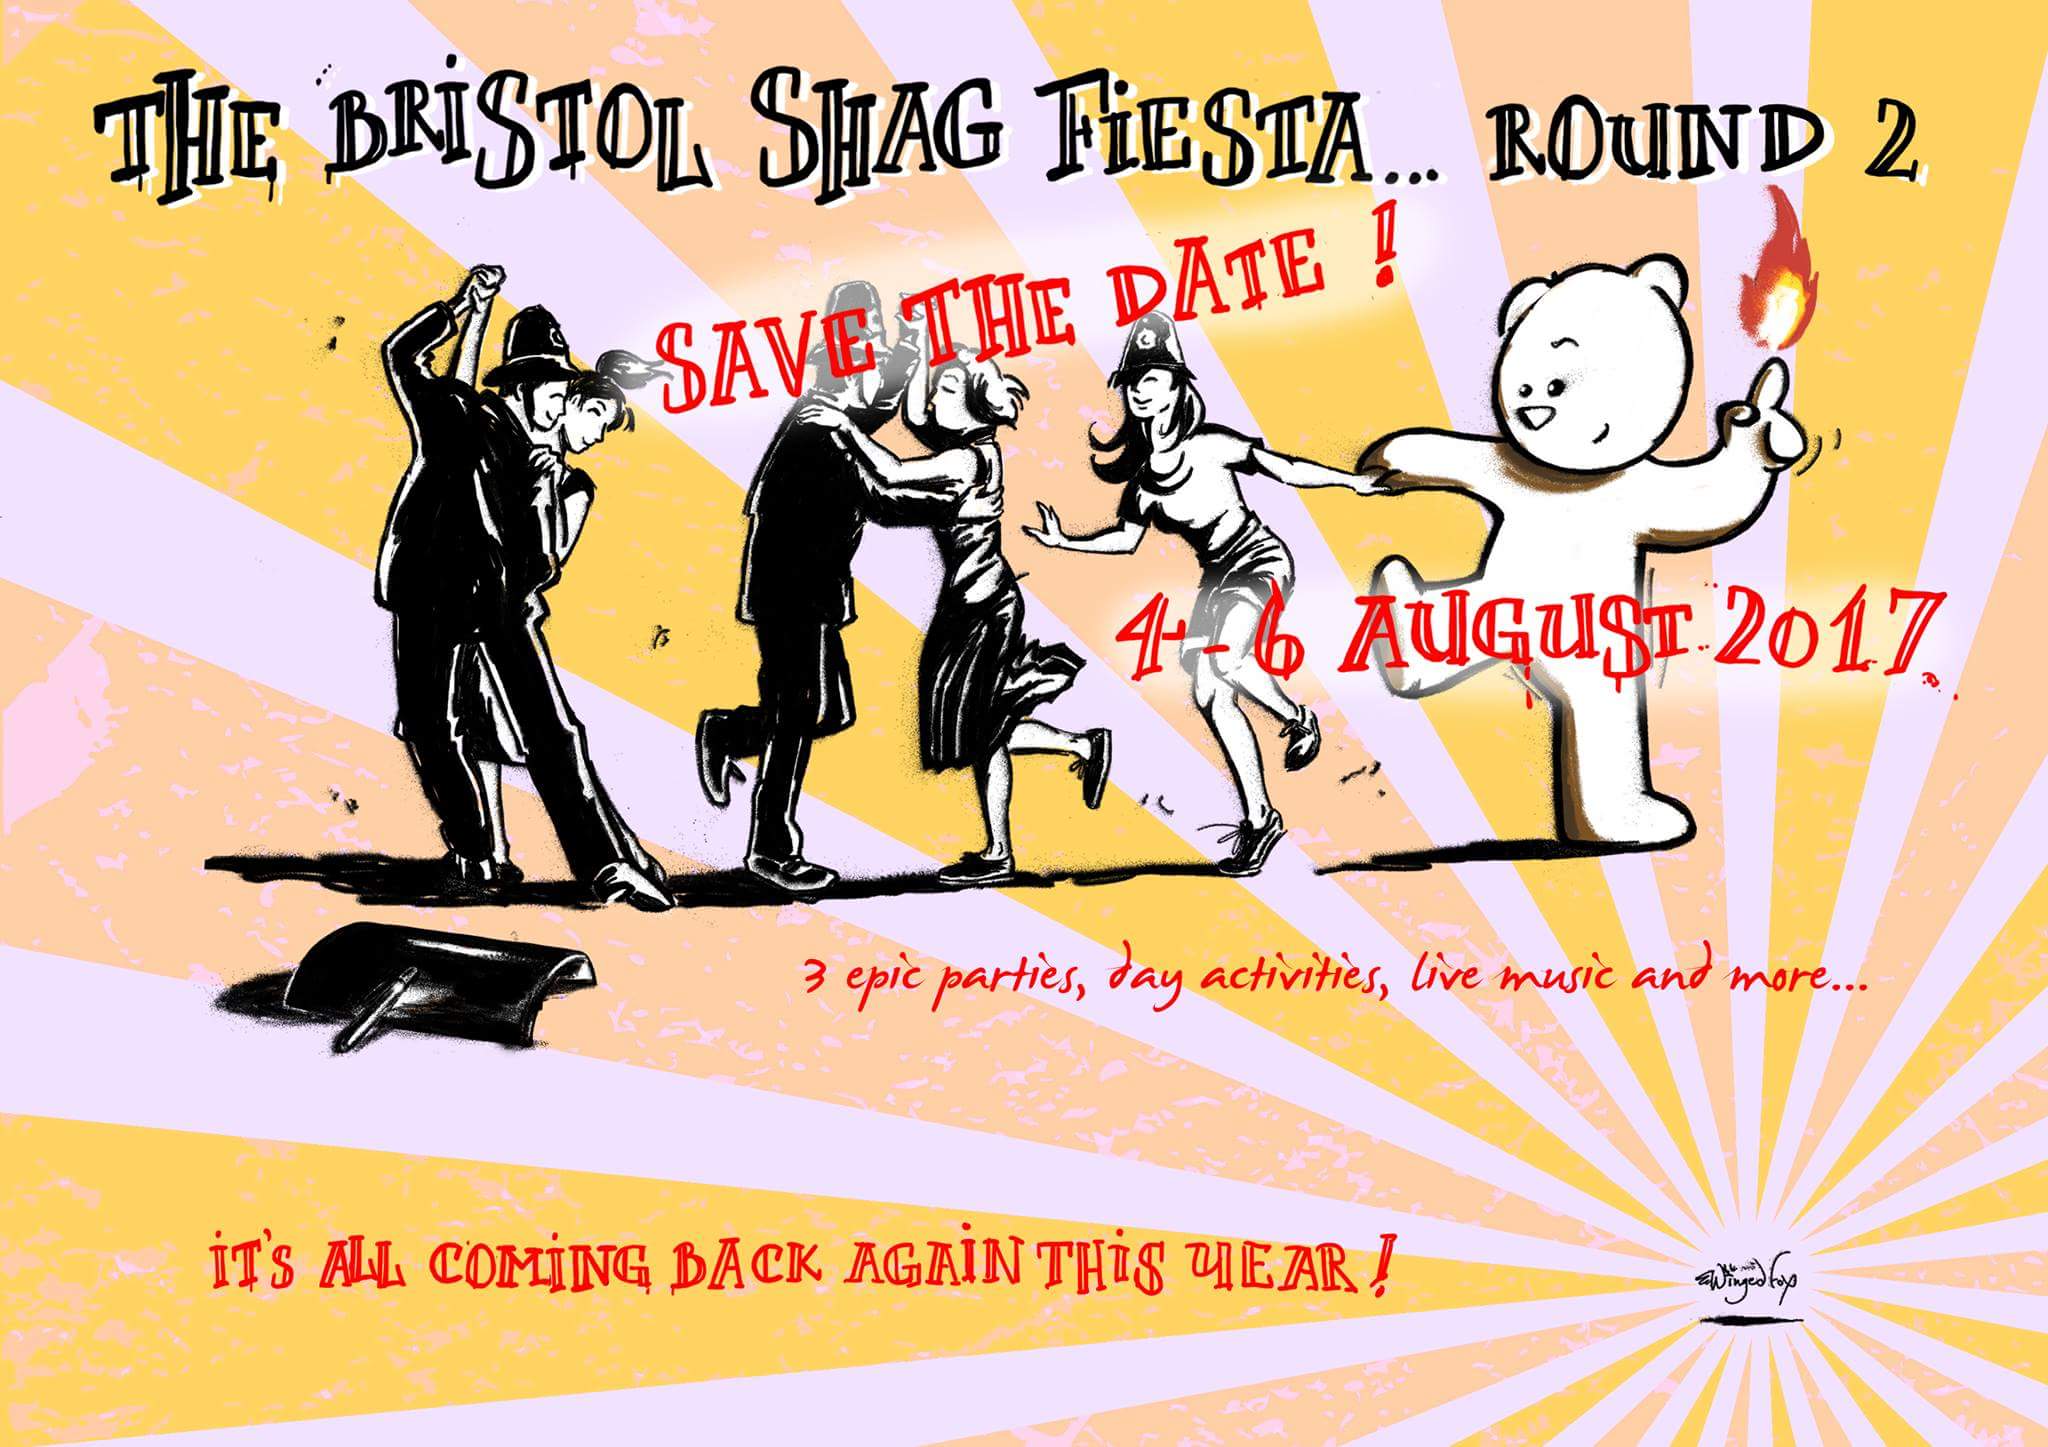 Bristol Shag Fiesta 2017